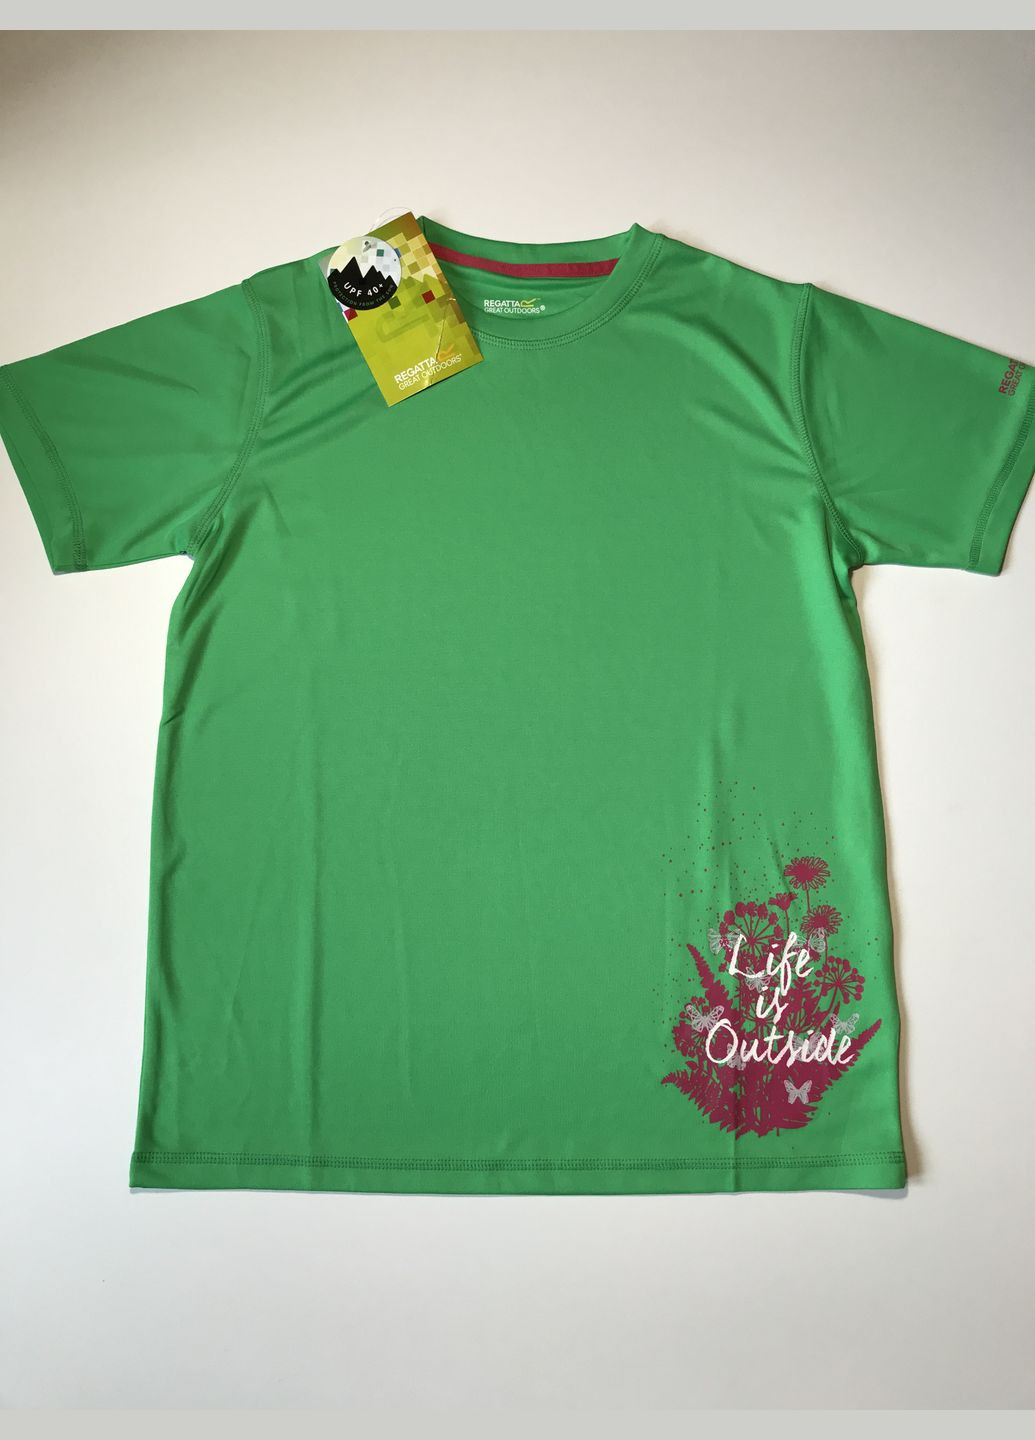 Зеленая летняя футболка солнцезащитная Regatta